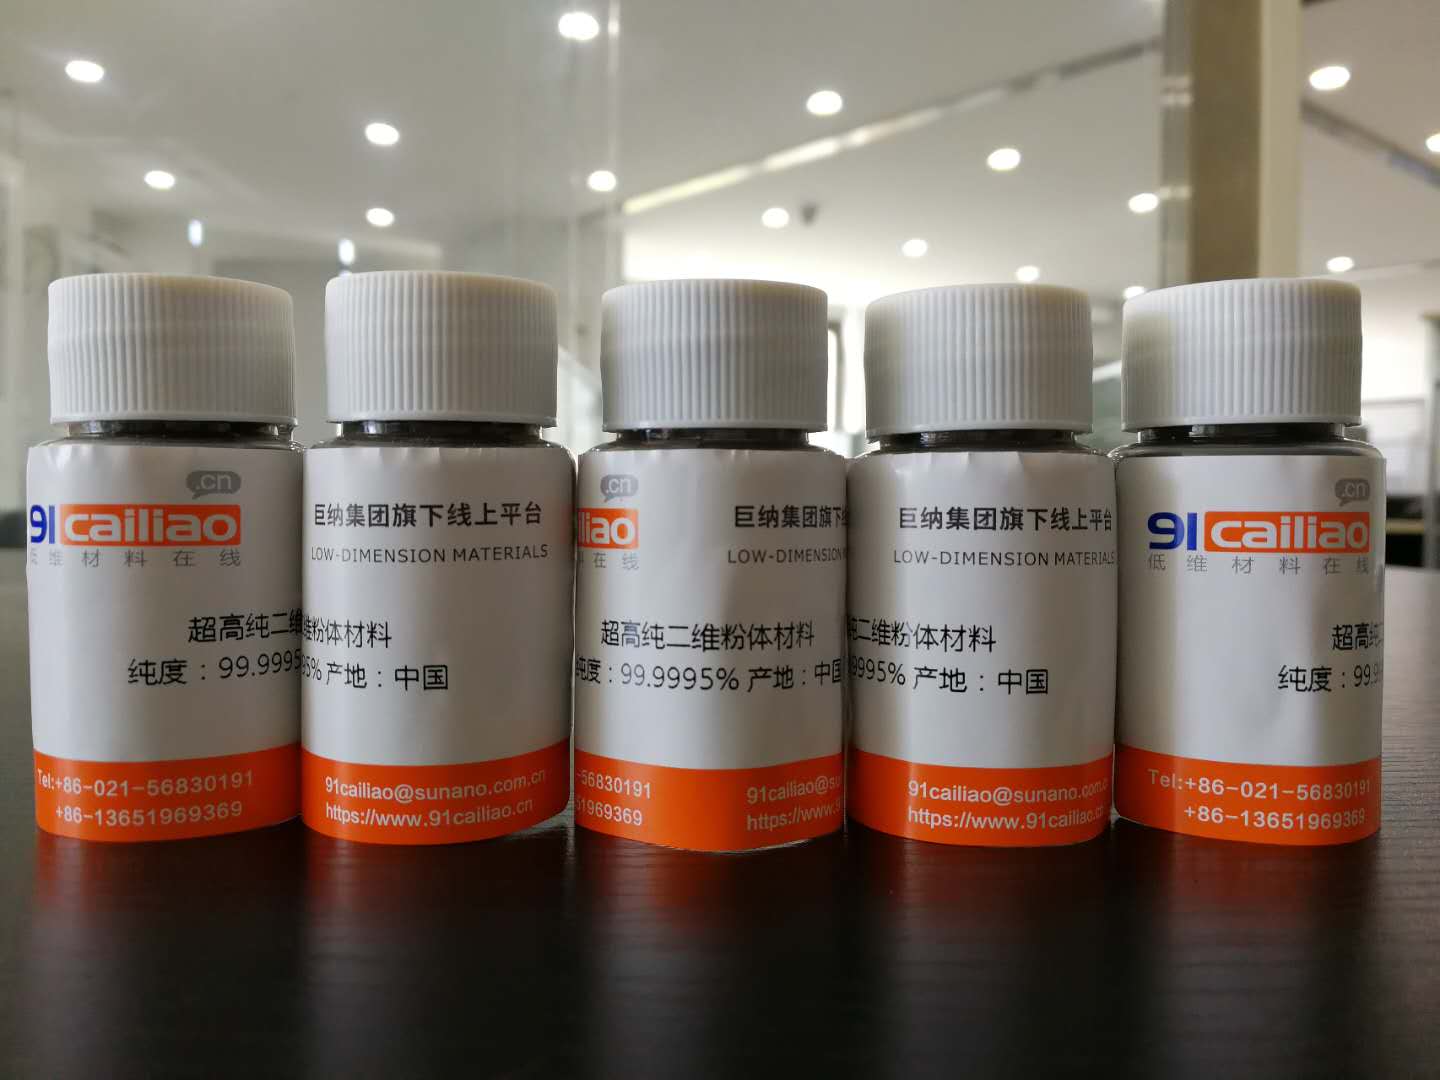 Ultra high pure ReSe2 powder